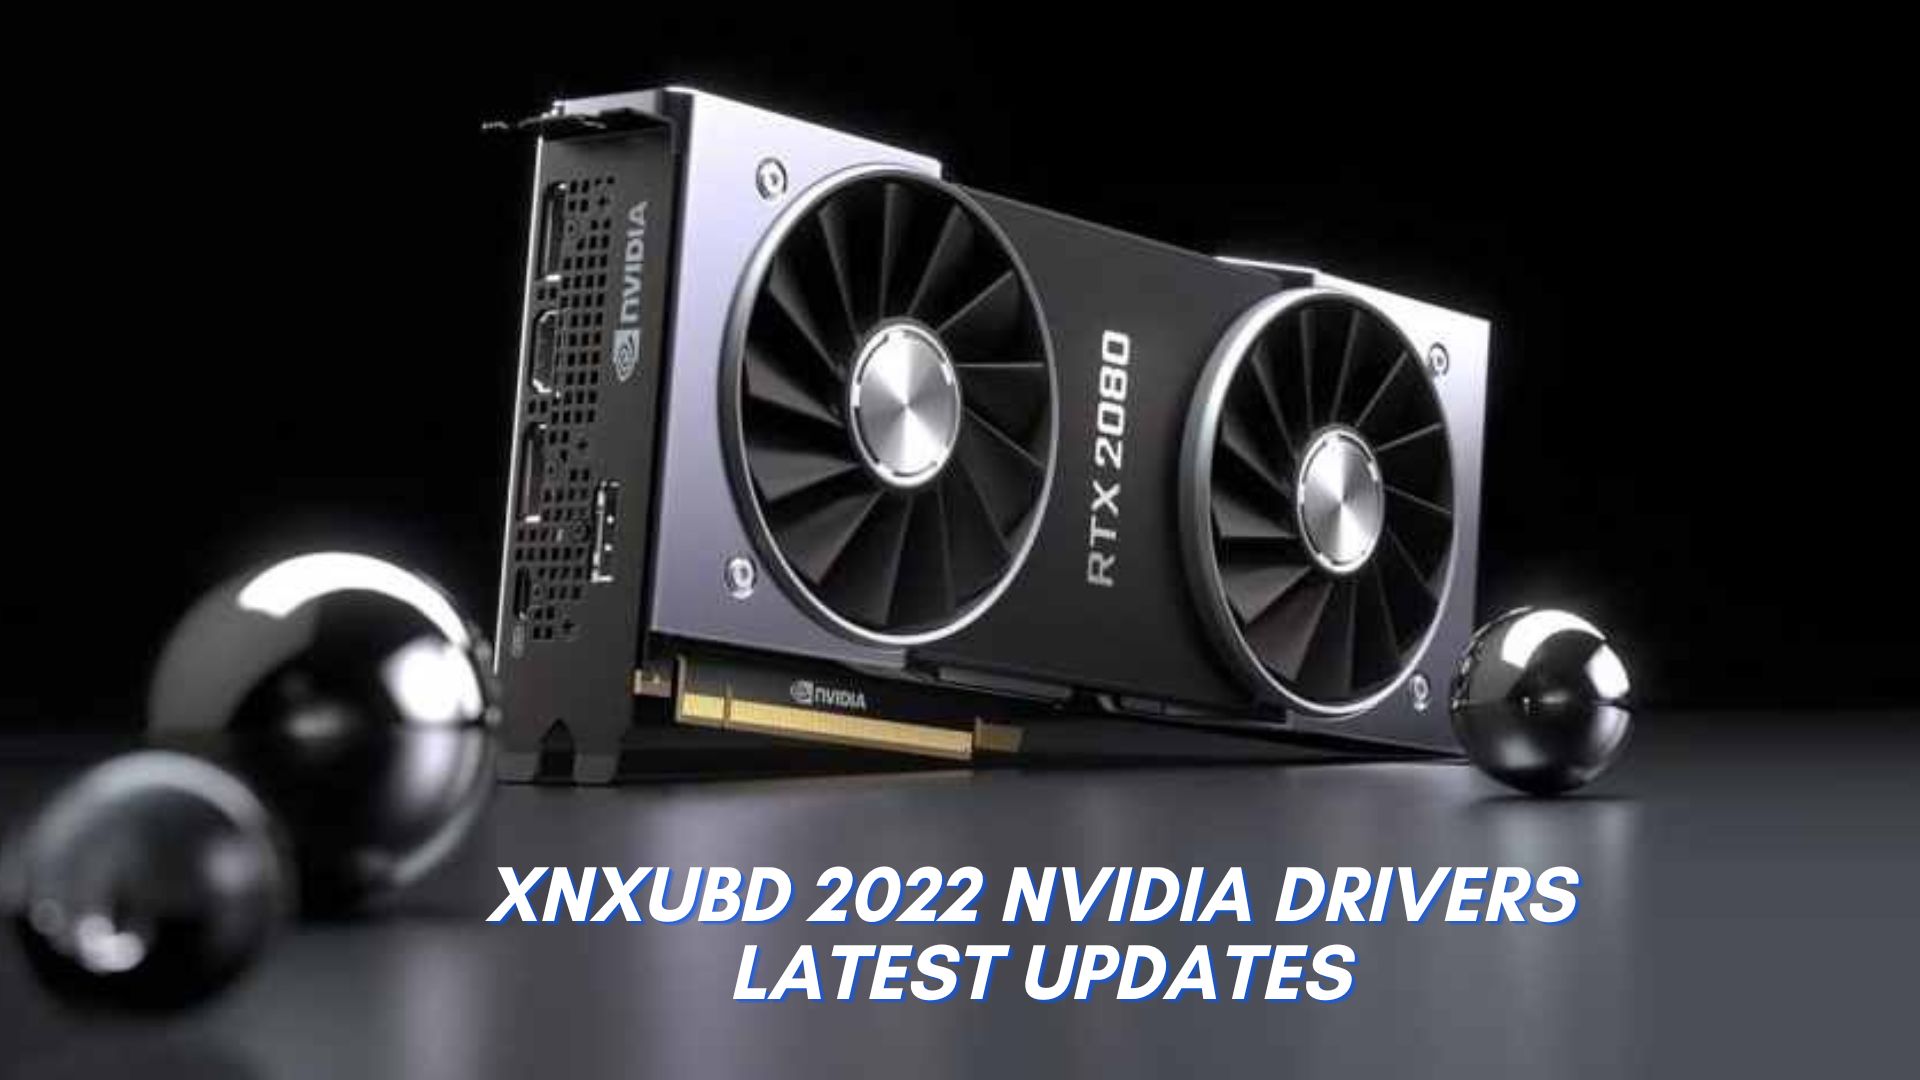 Xnxubd 2022 Nvidia Drivers - Latest Updates